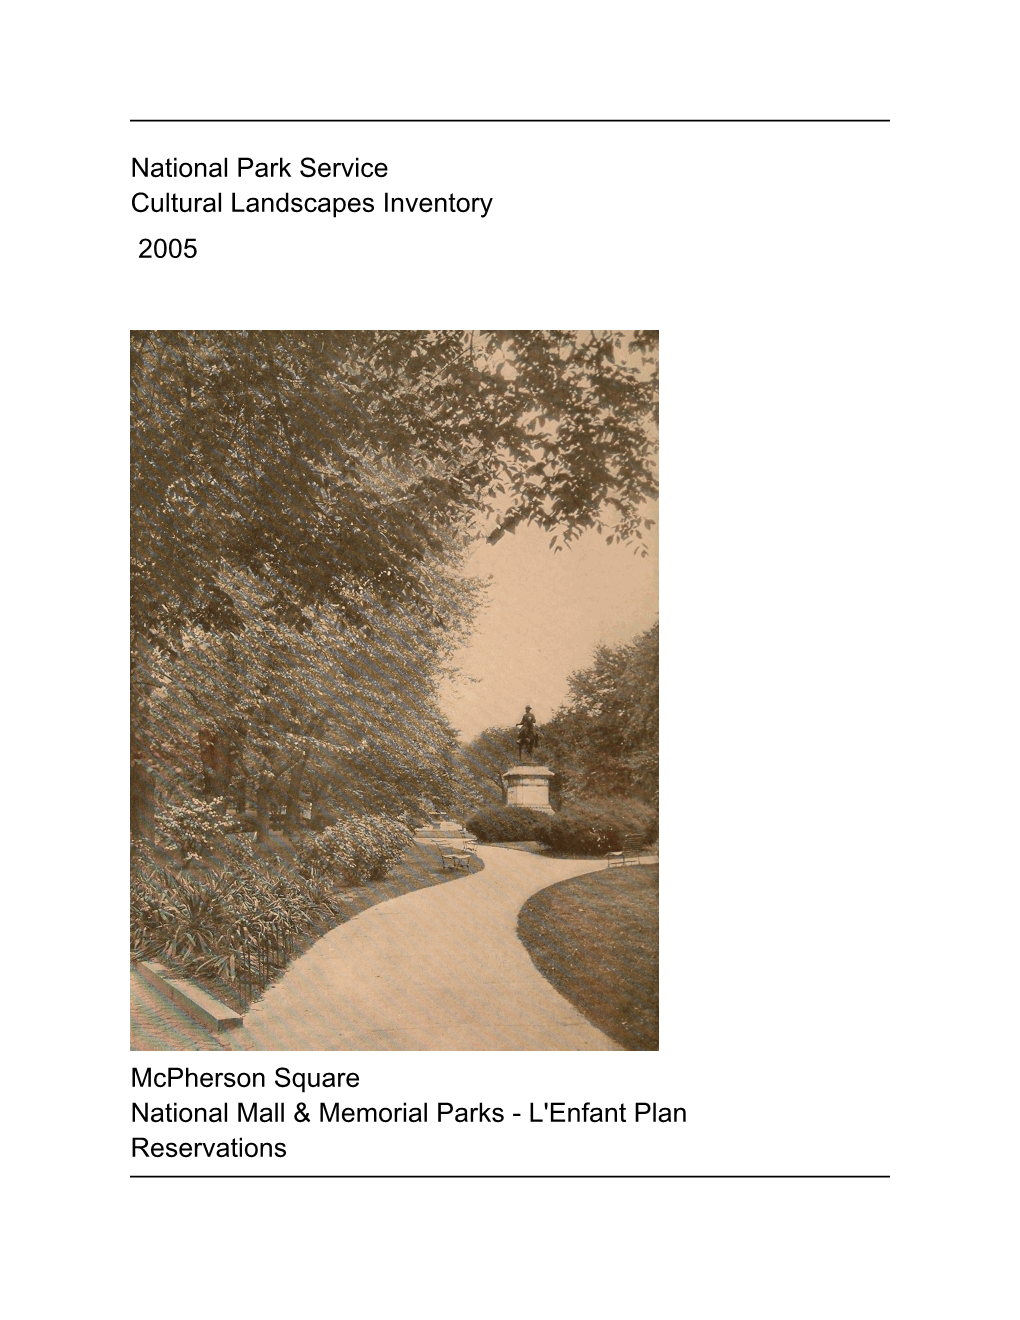 National Park Service Cultural Landscapes Inventory Mcpherson